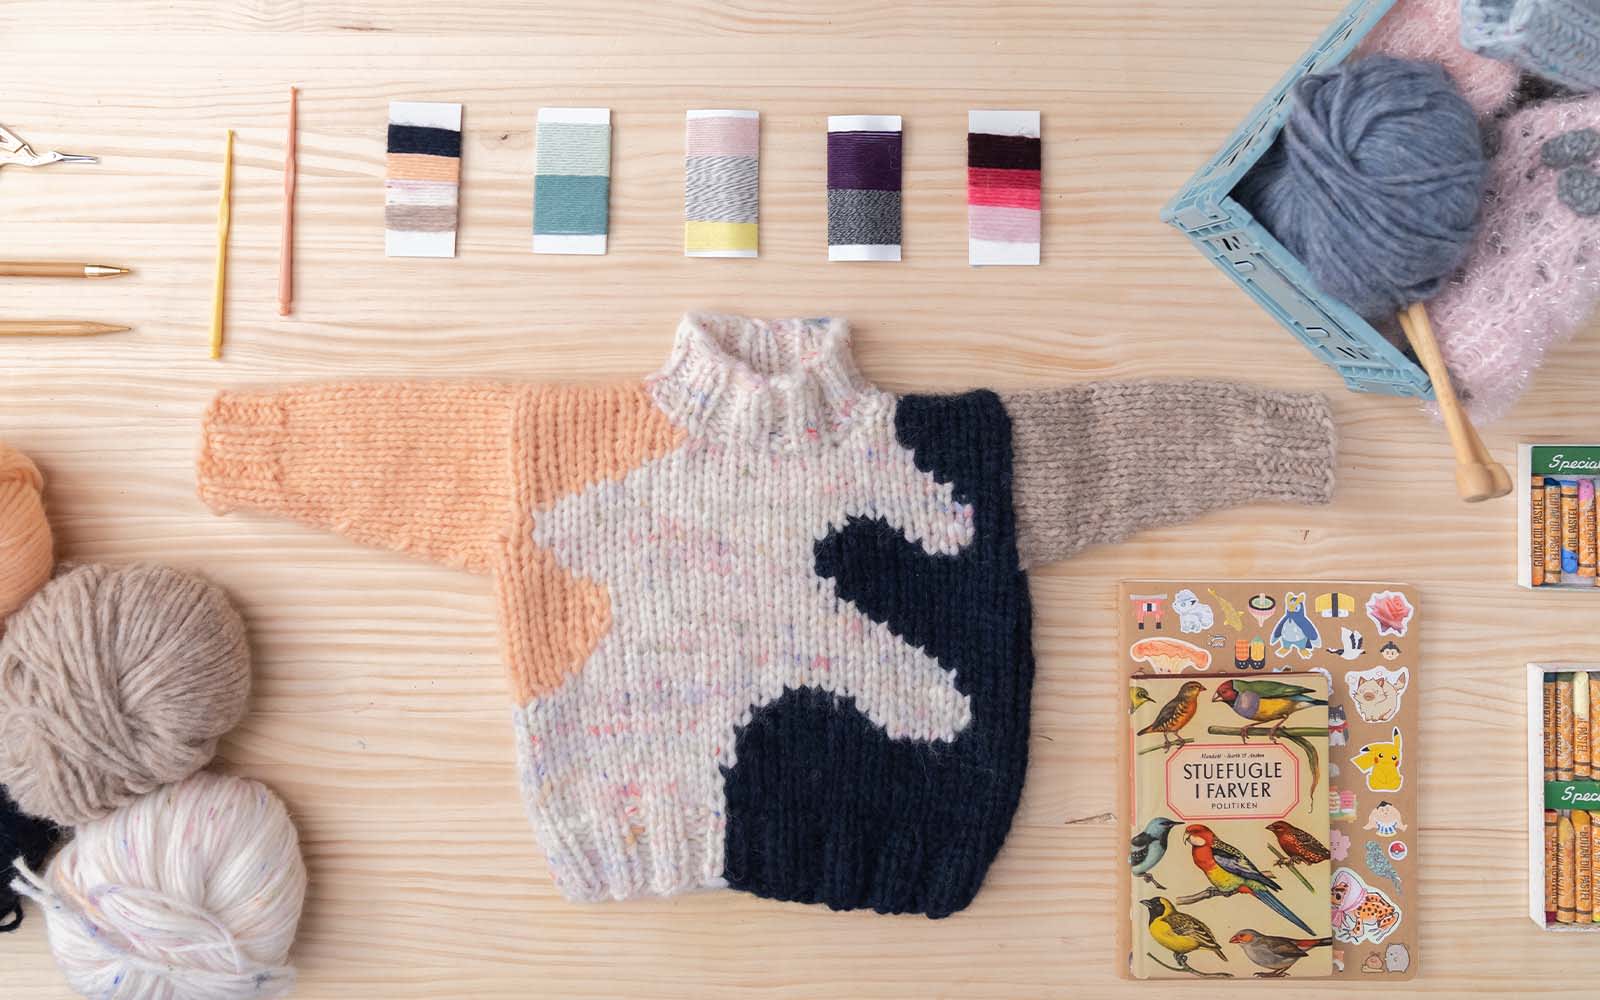 Free PDF Pattern to Knit Your Own Intarsia Sweater | Domestika